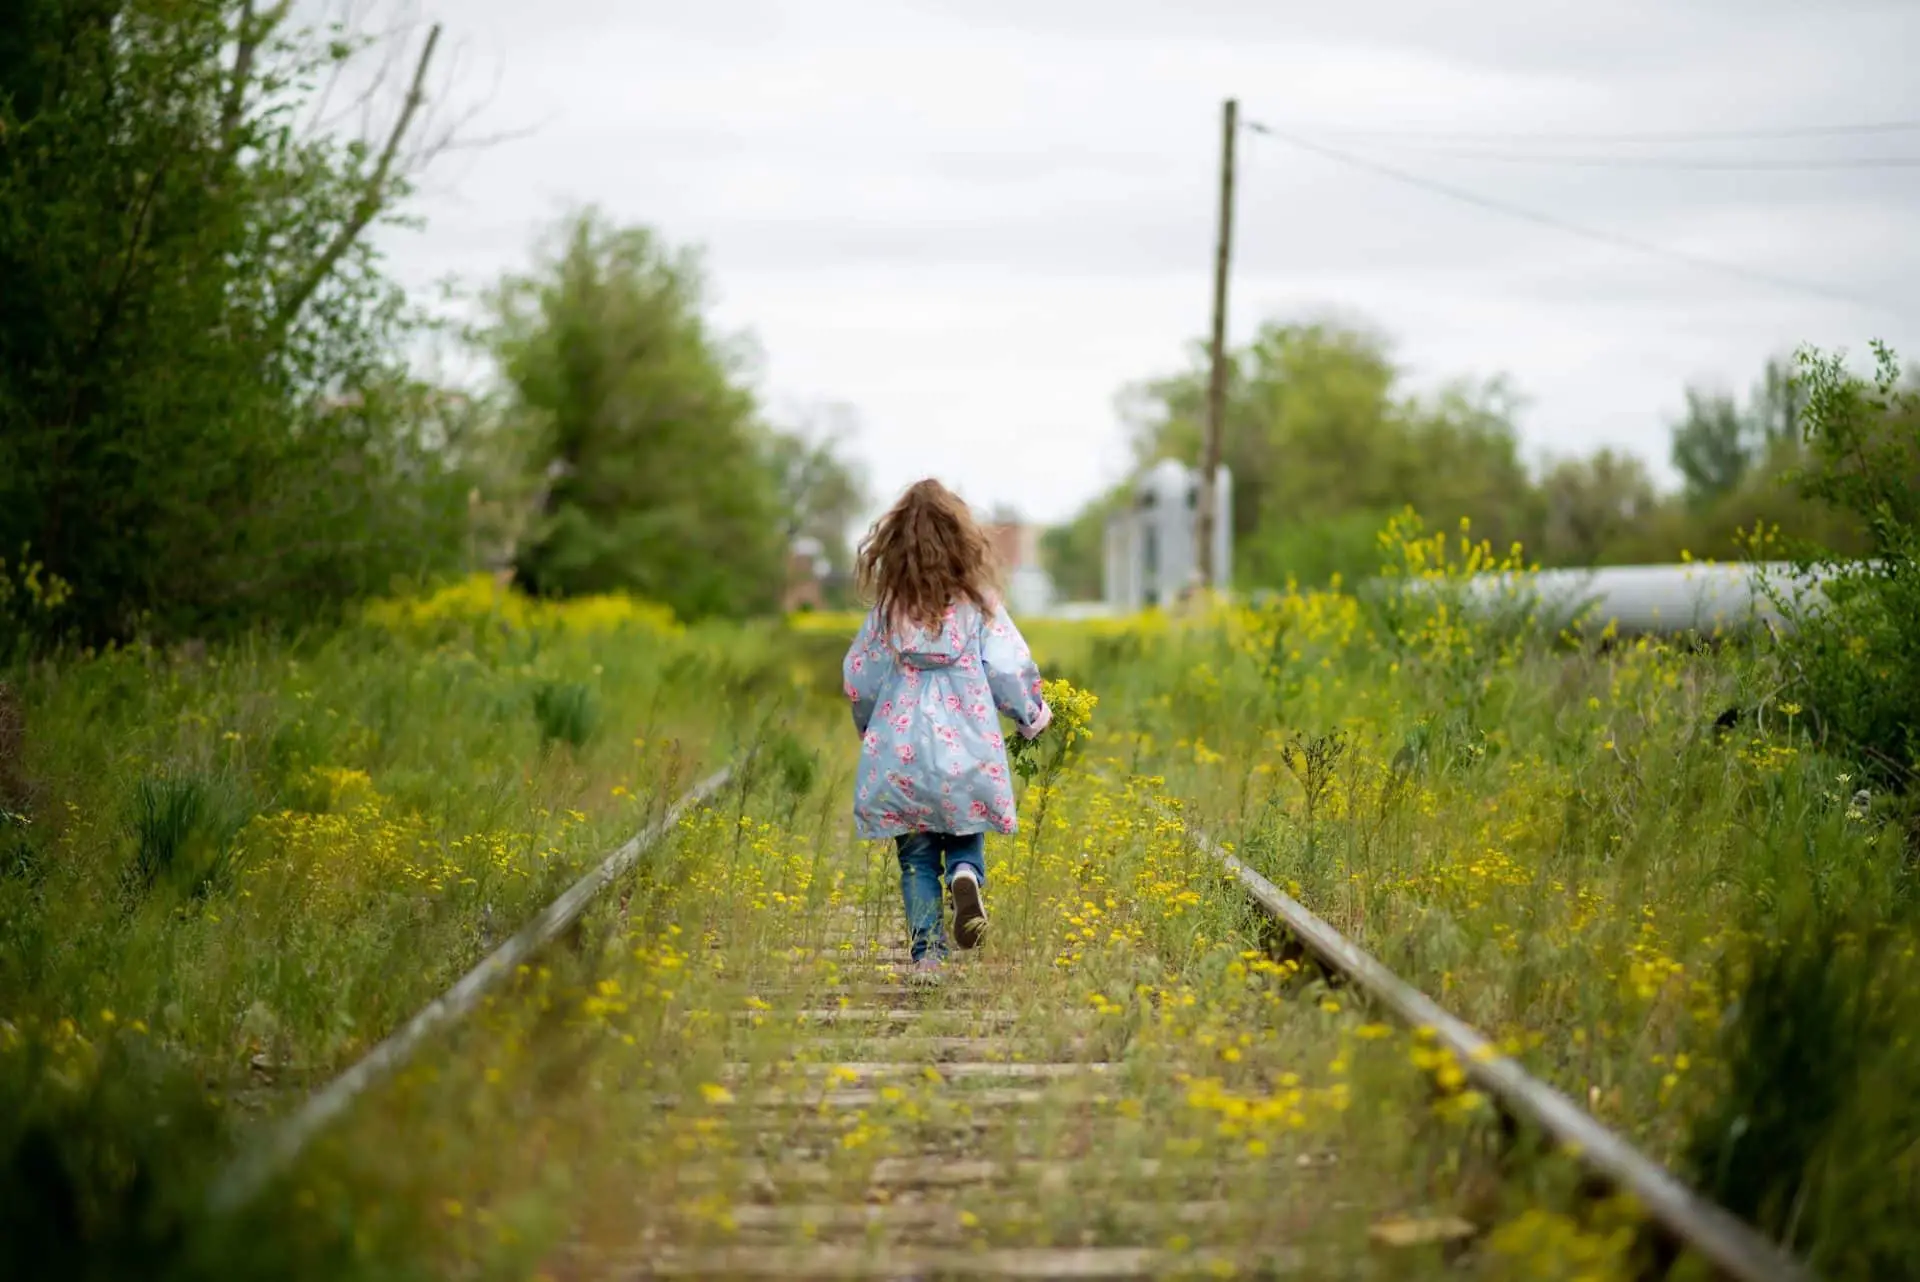 A little girl walks along the grassy railroad tracks.